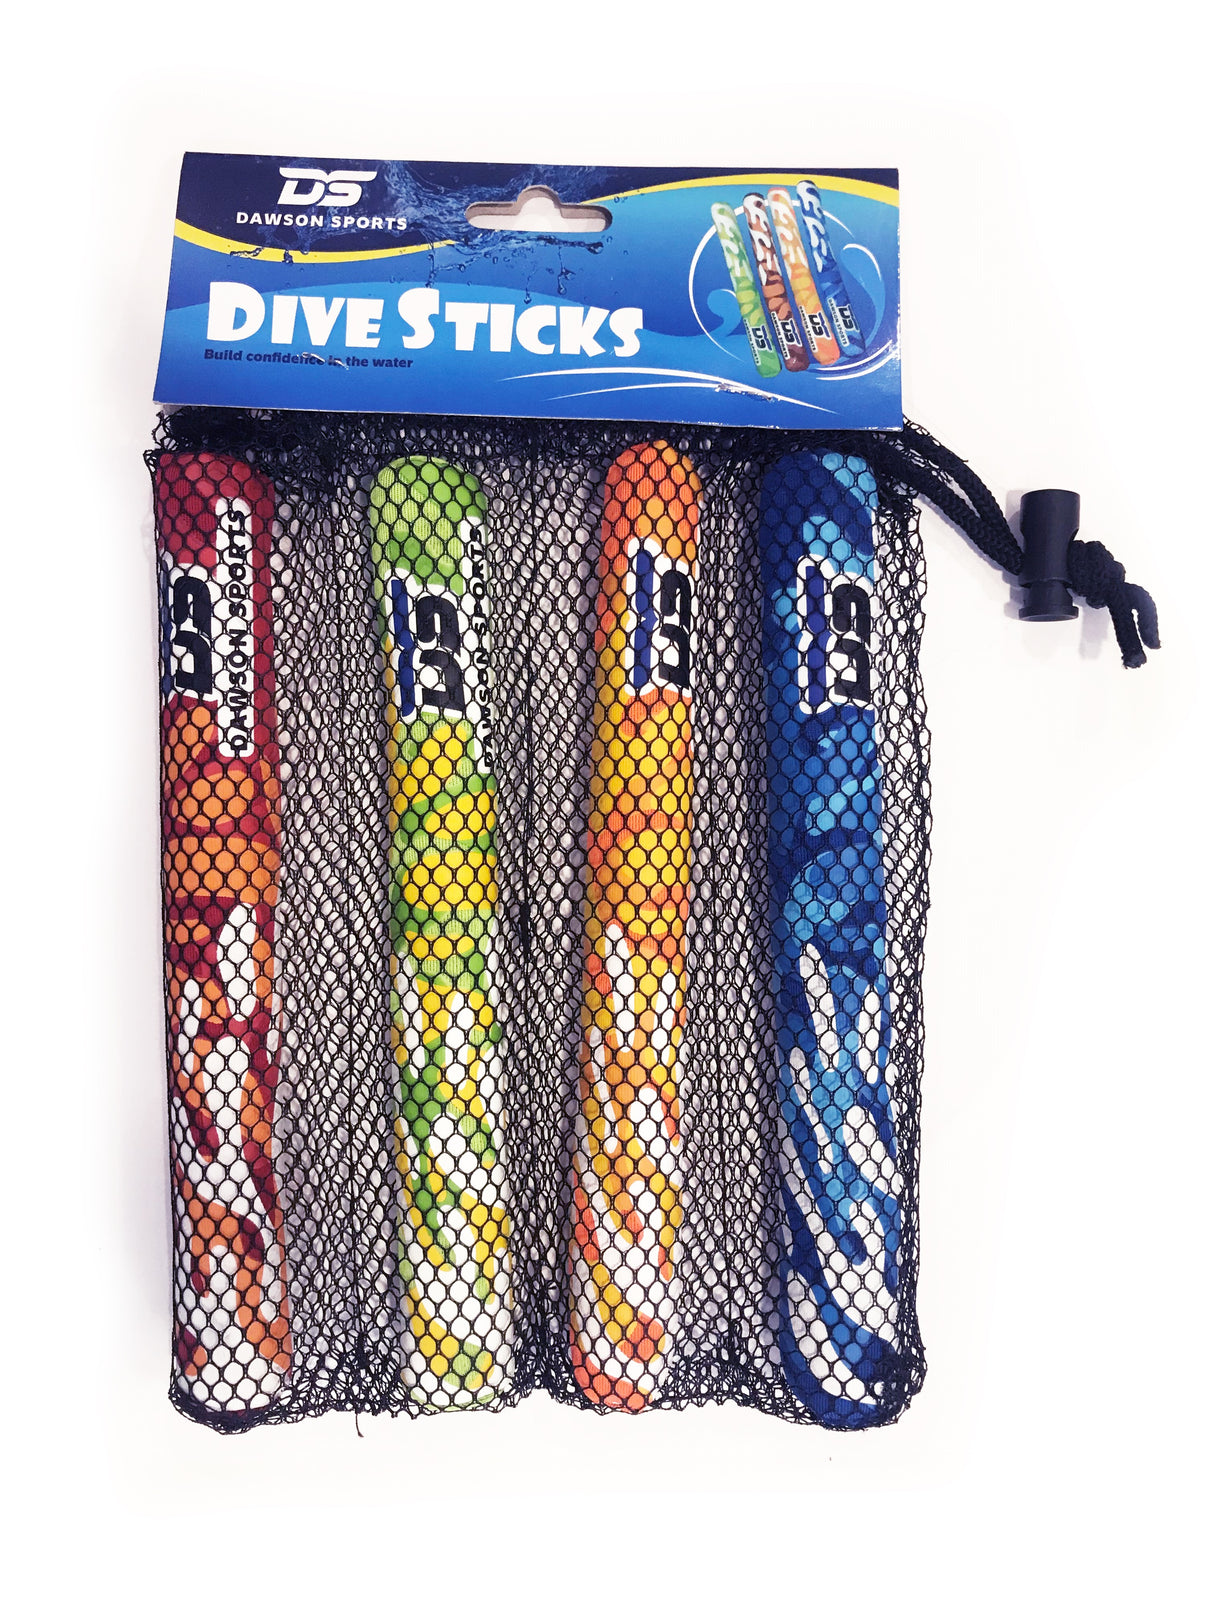 DS Dive Sticks - Dawson Sports